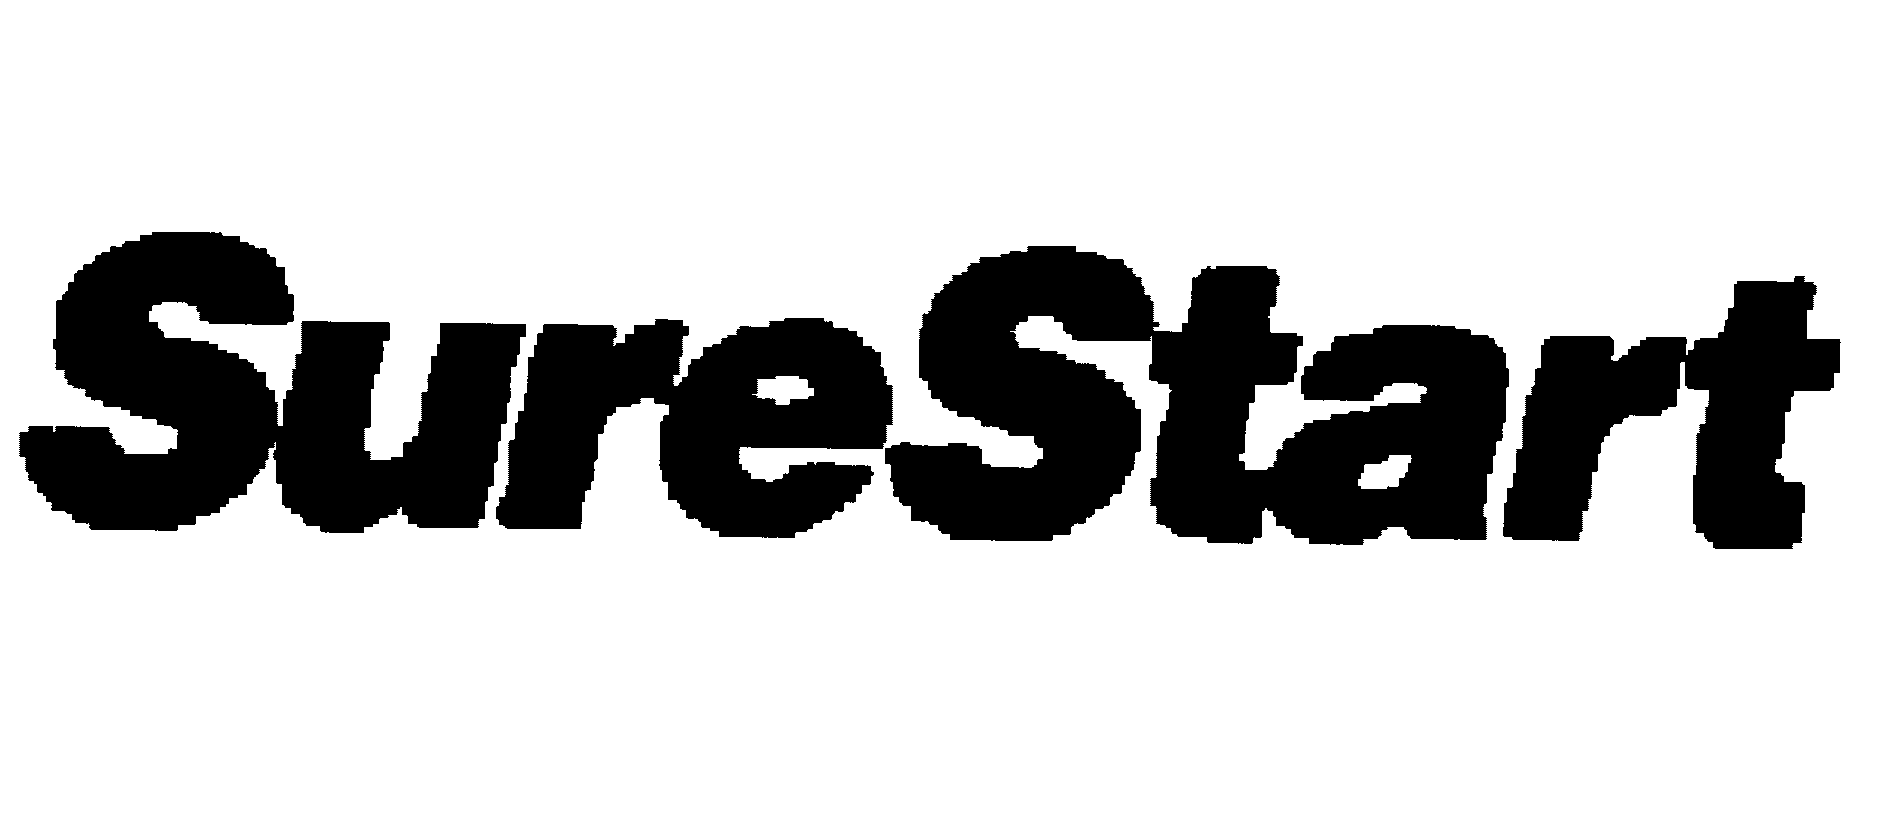 Trademark Logo SURESTART